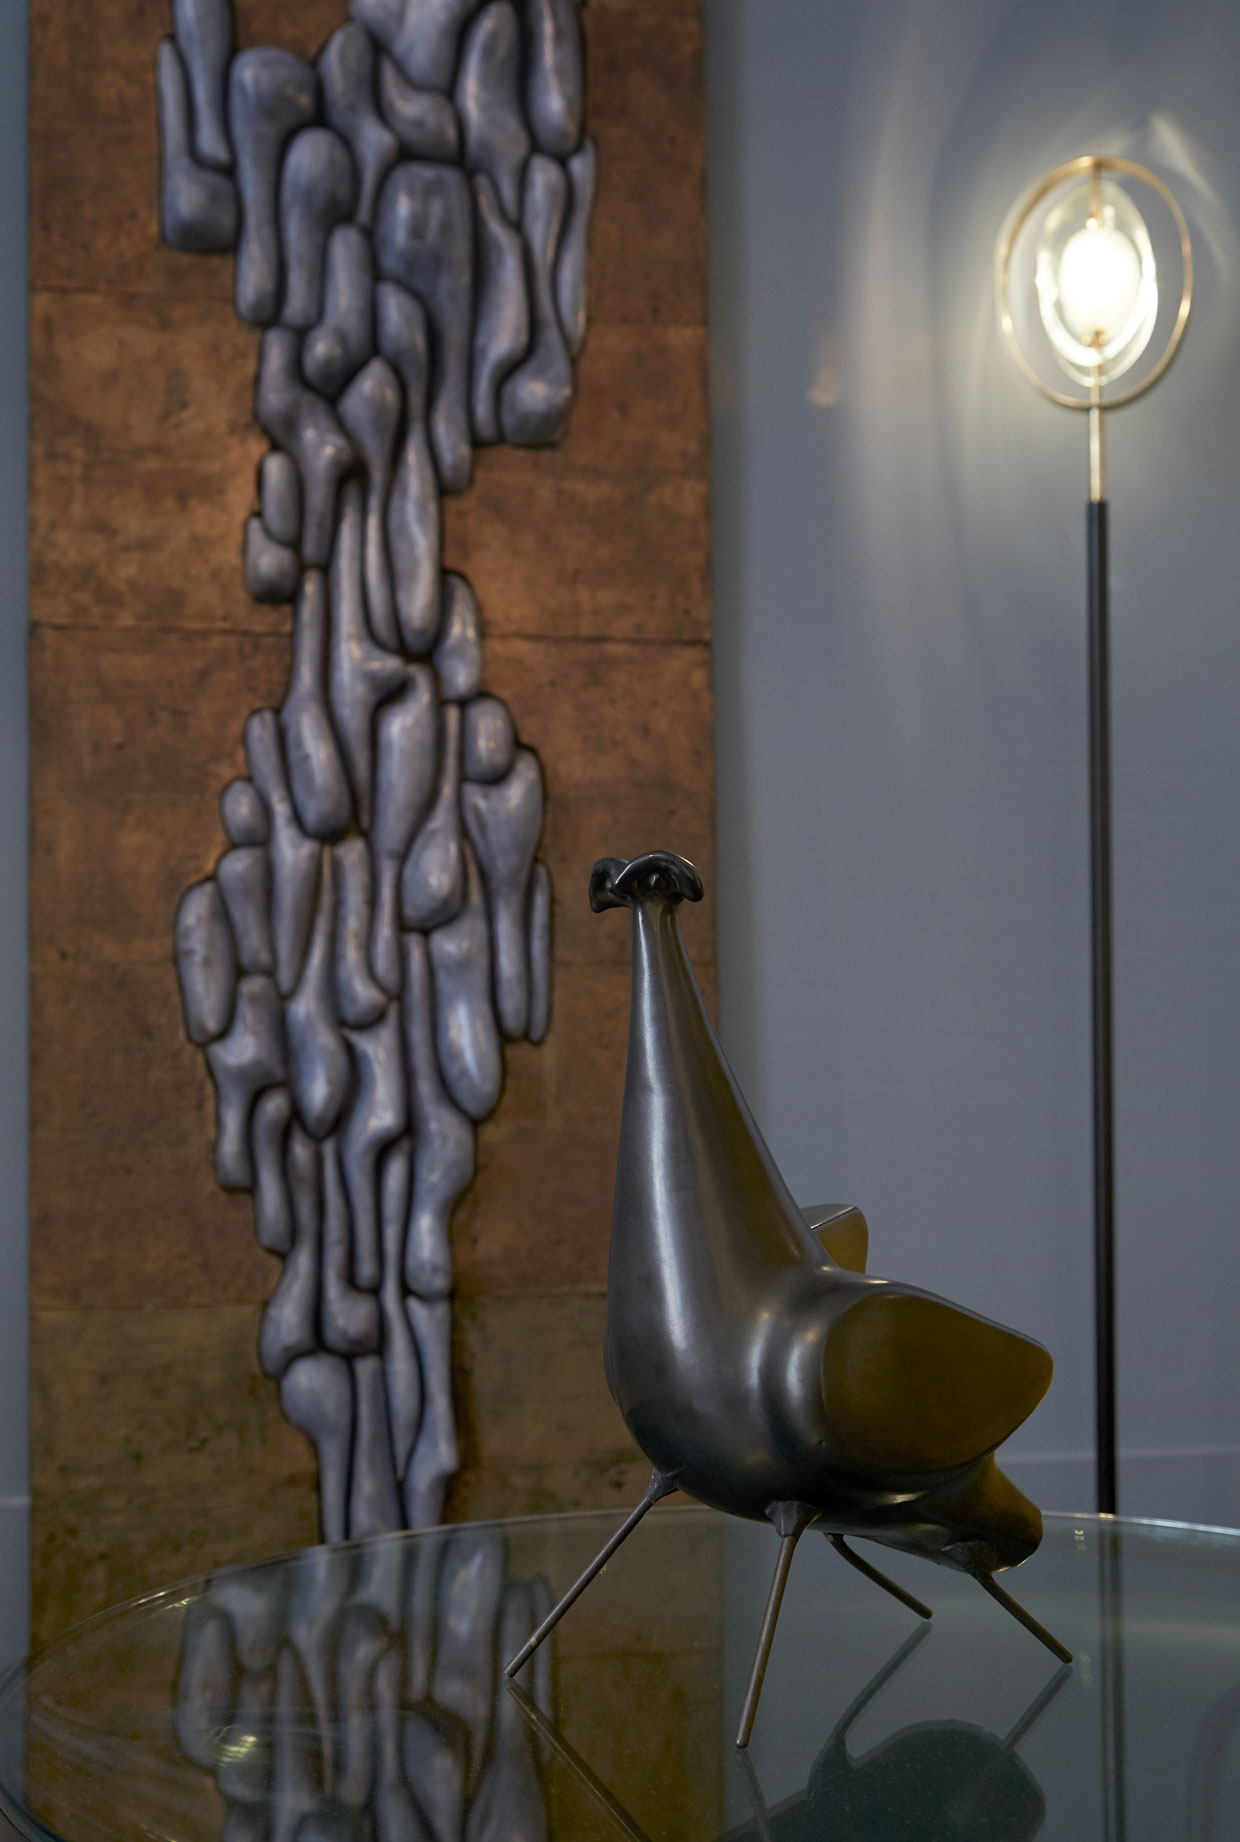 Georges Jouve, “4-legs bird” ceramic sculpture, vue 01